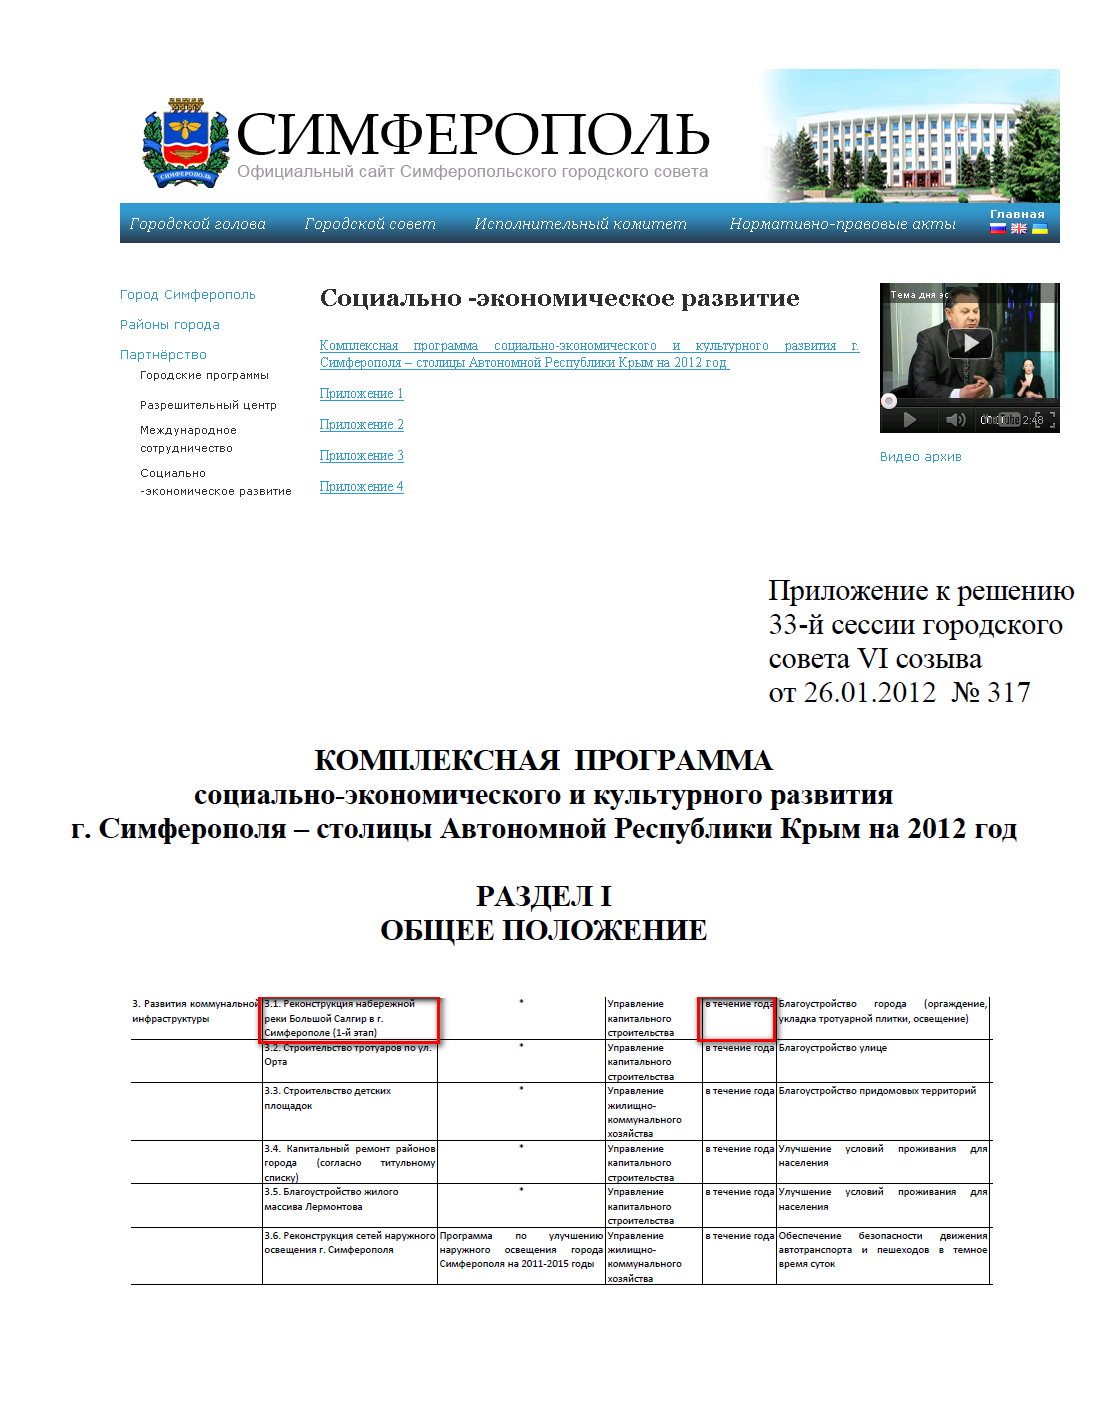 http://sim.gov.ua/ru/static/13